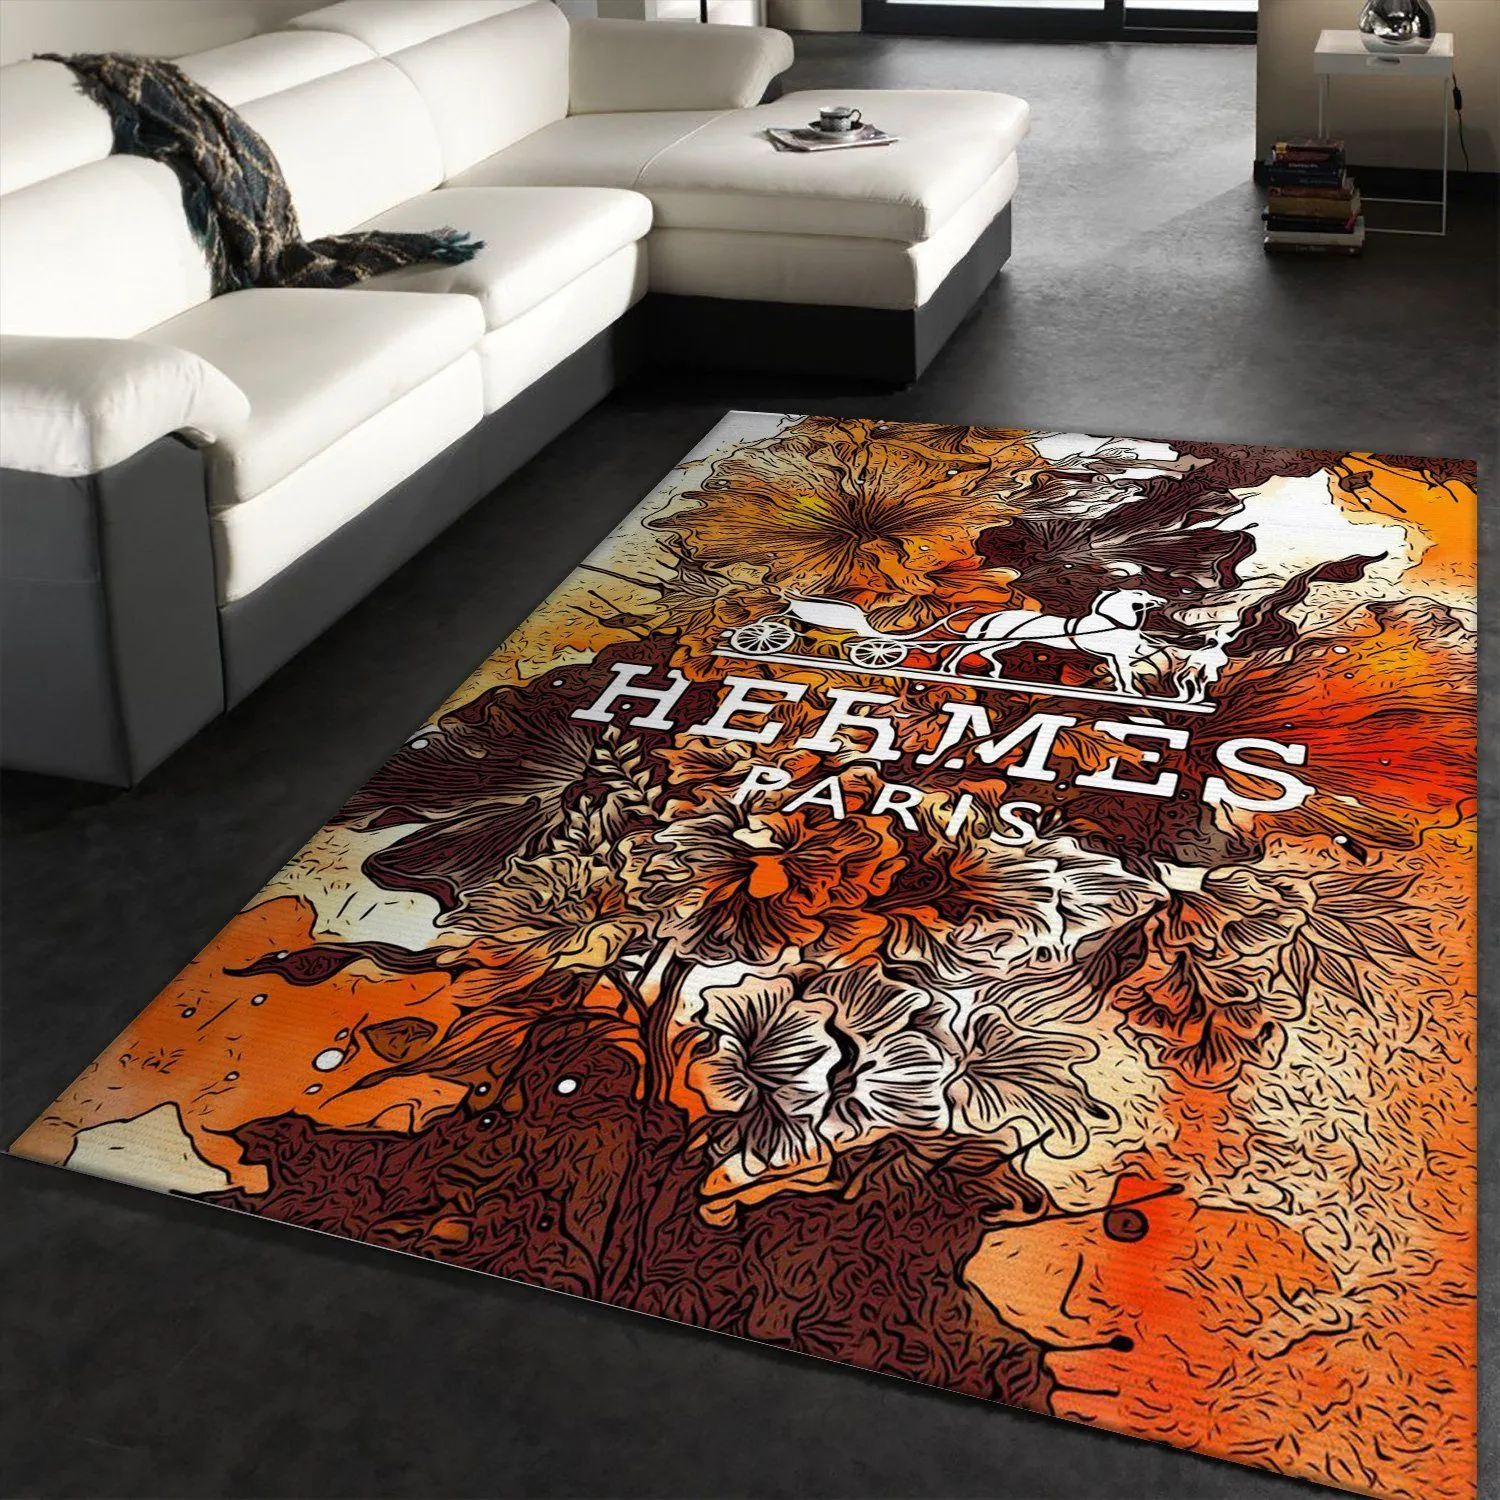 Hermes Rectangle Rug Door Mat Luxury Area Carpet Home Decor Fashion Brand